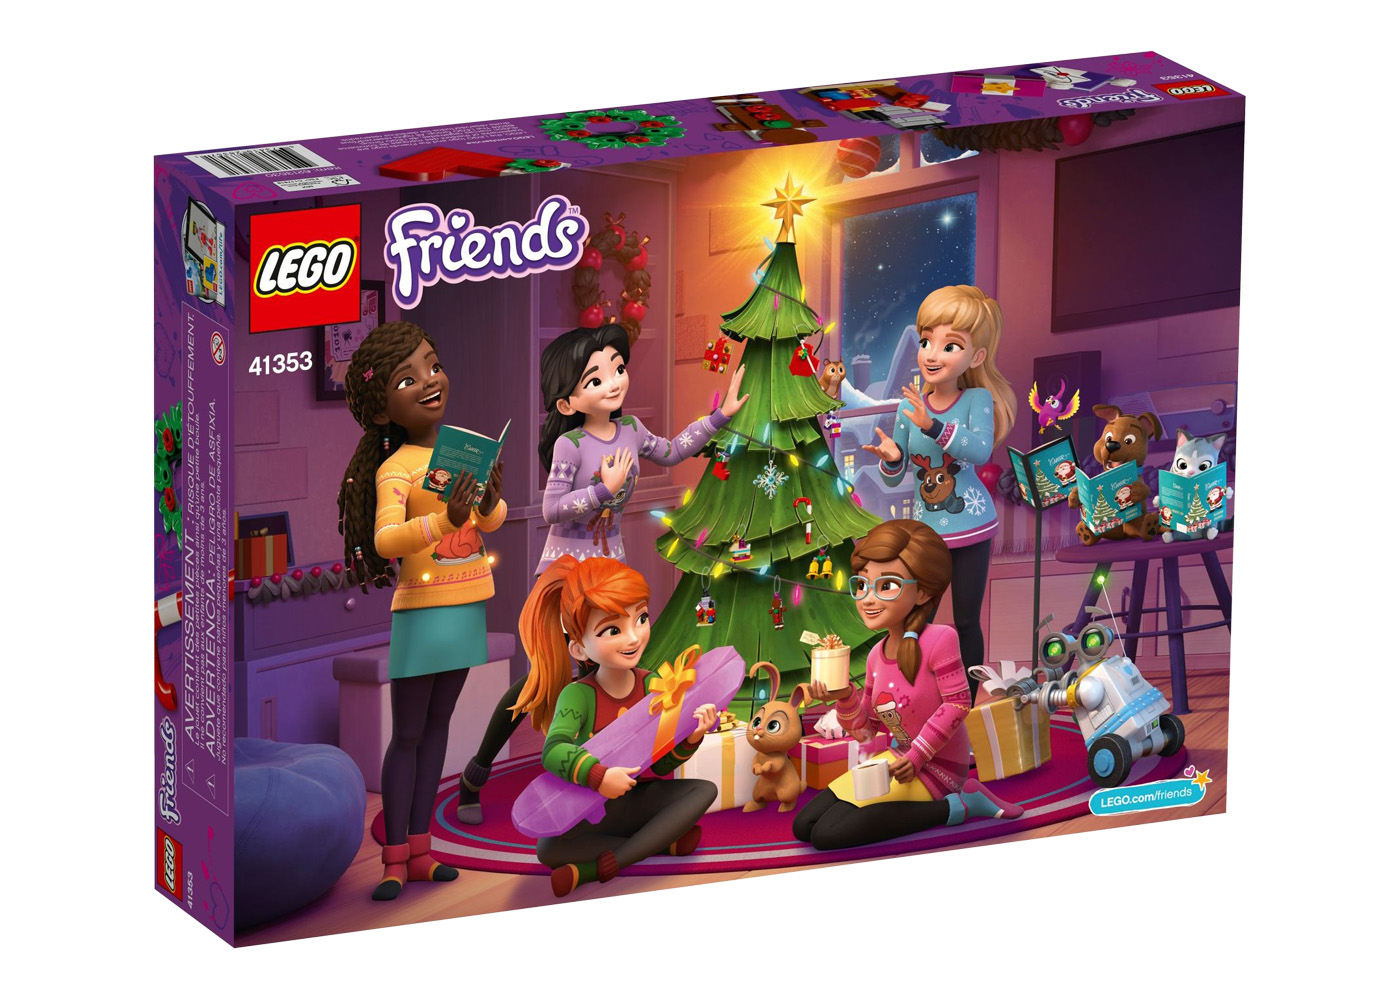 LEGO Friends Advent Calendar Set 41353